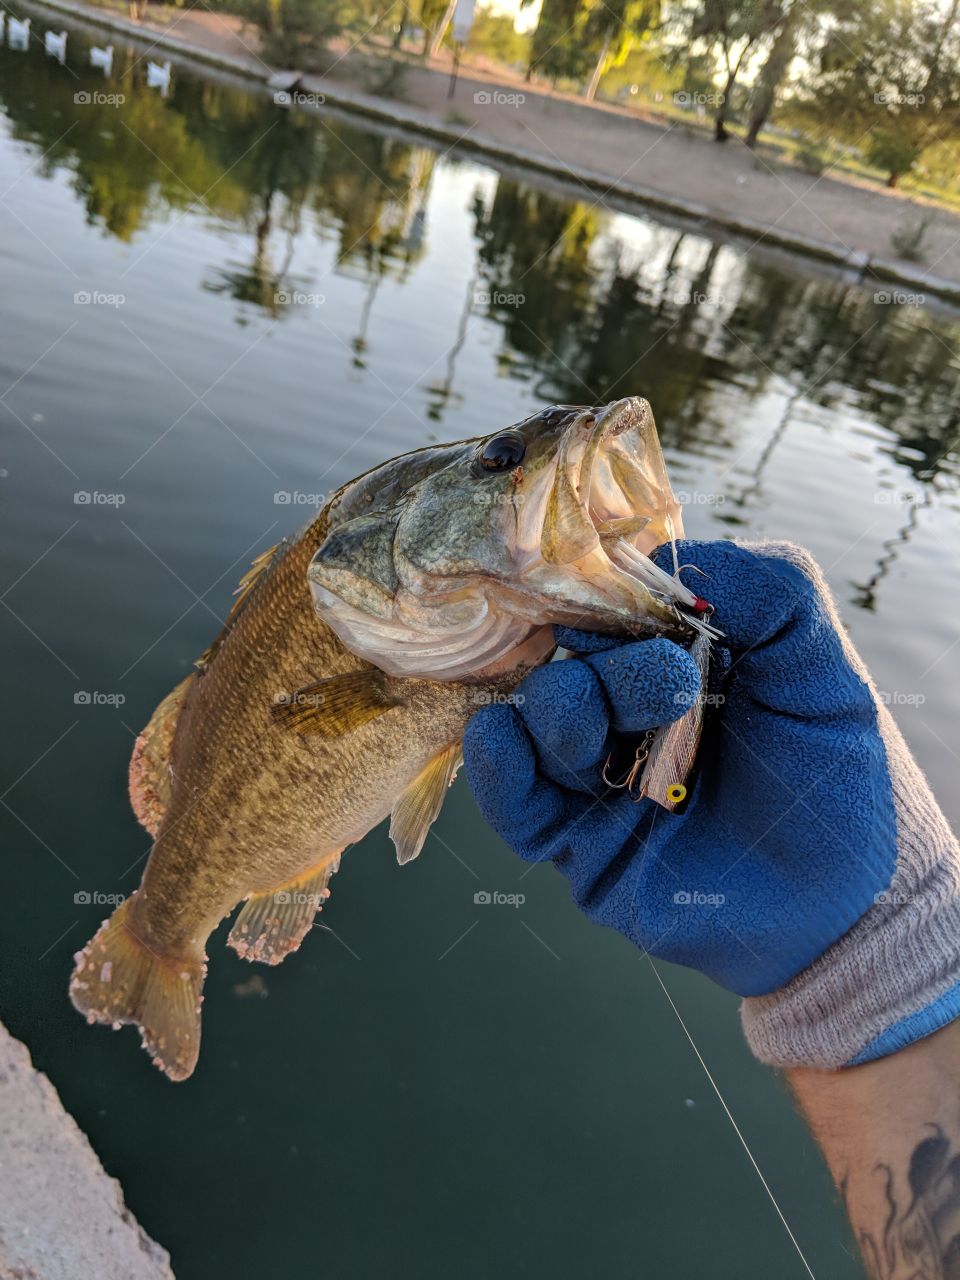 bigmouth bass in Arizona